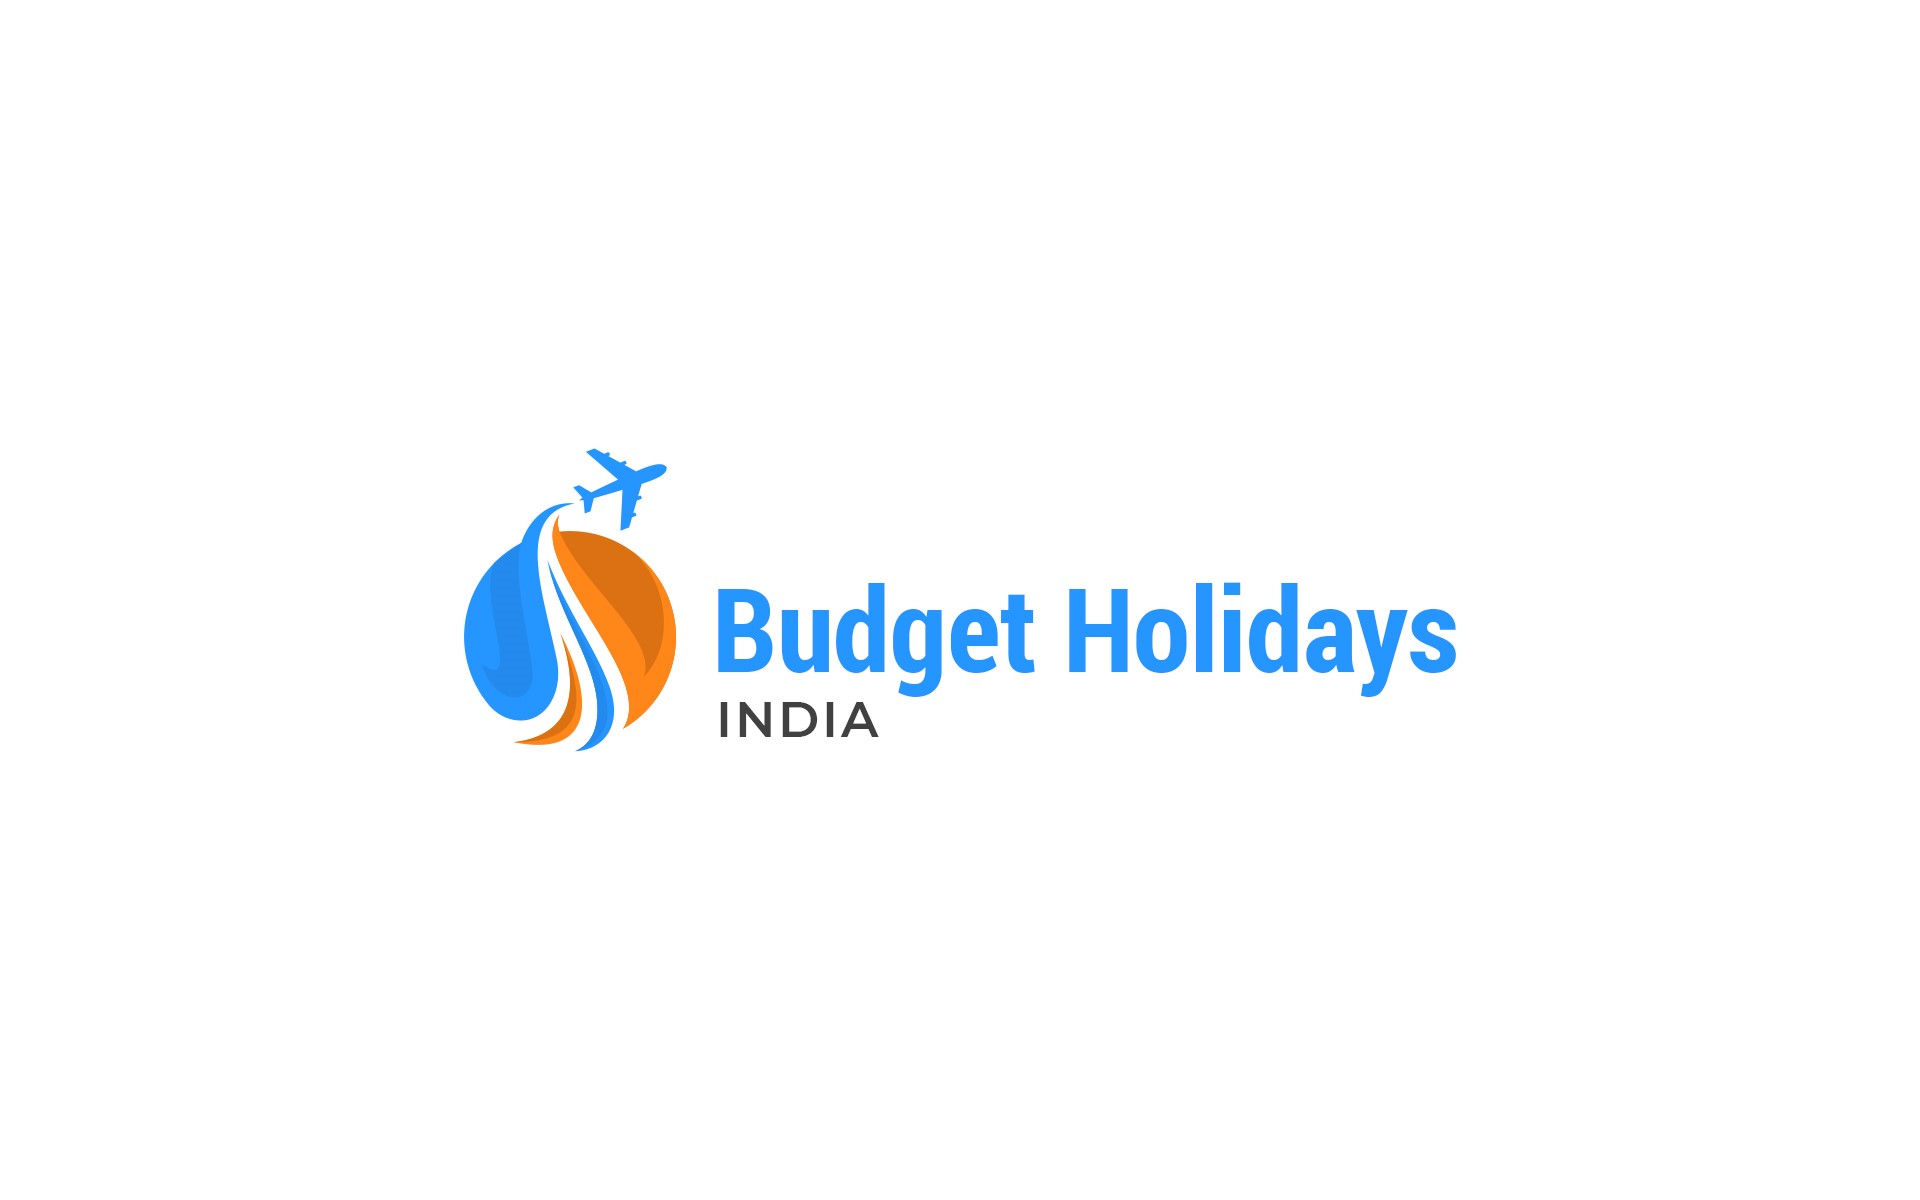 Budget Holidays India